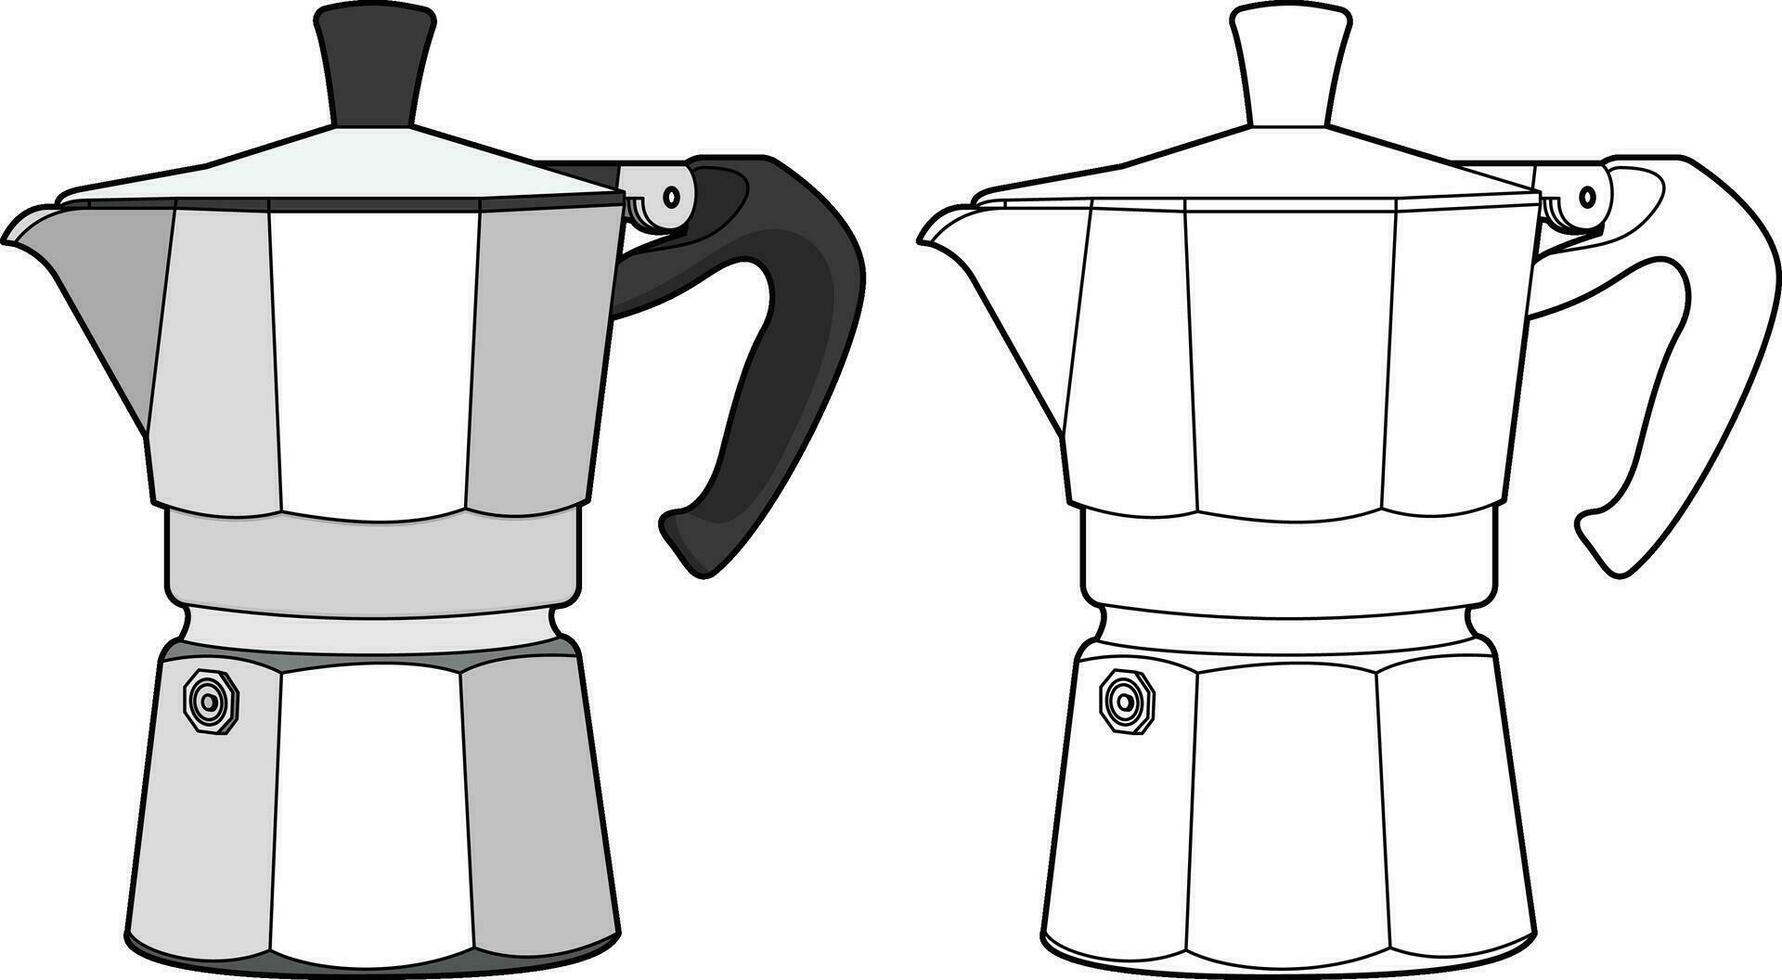 Mocha pot or espresso maker cup line drawing illustration vector image